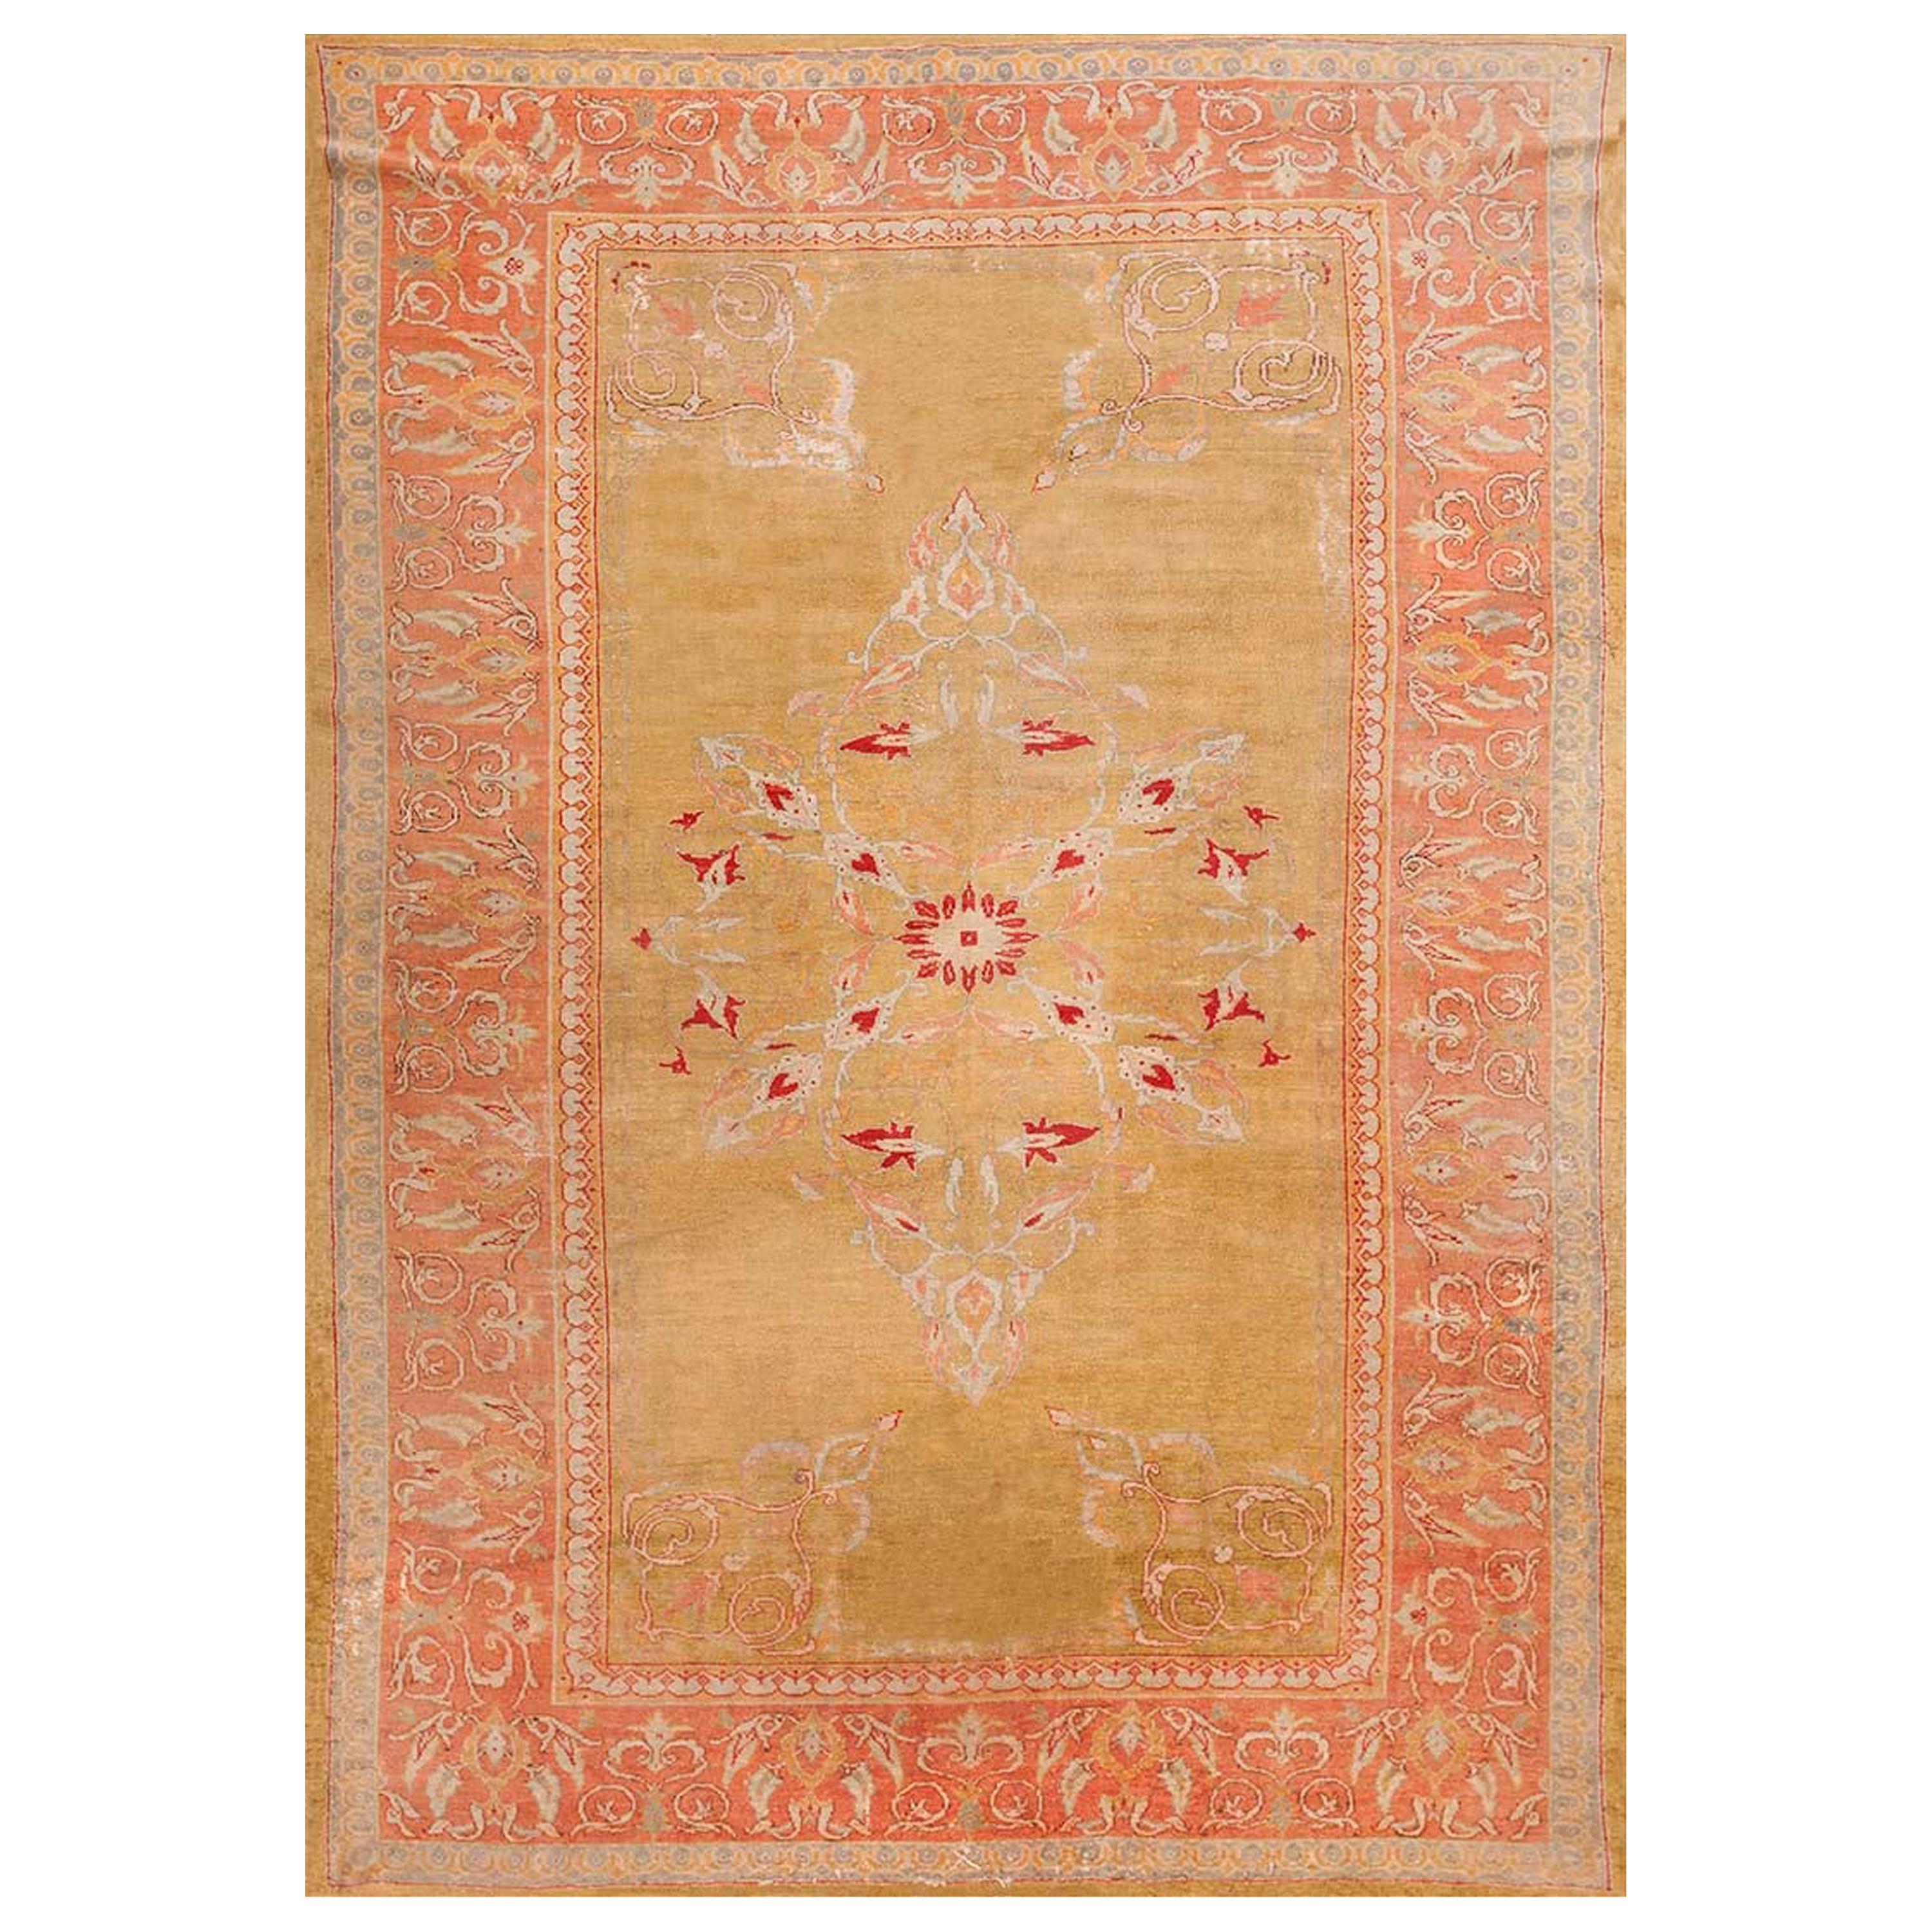 19th Century Turkish Oushak Carpet ( 7'6" x 10'10" - 233 x 330 ) For Sale